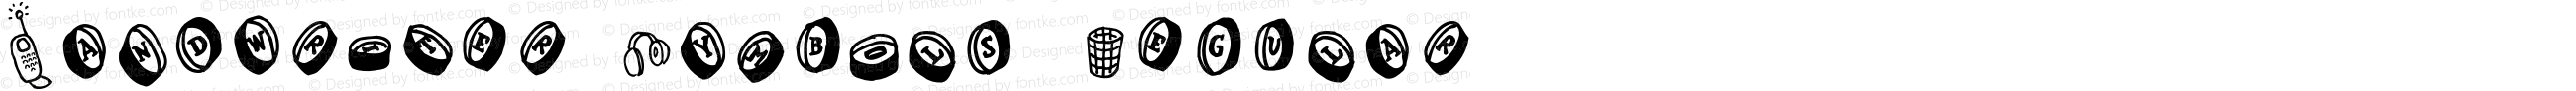 Handwriter-Symbols